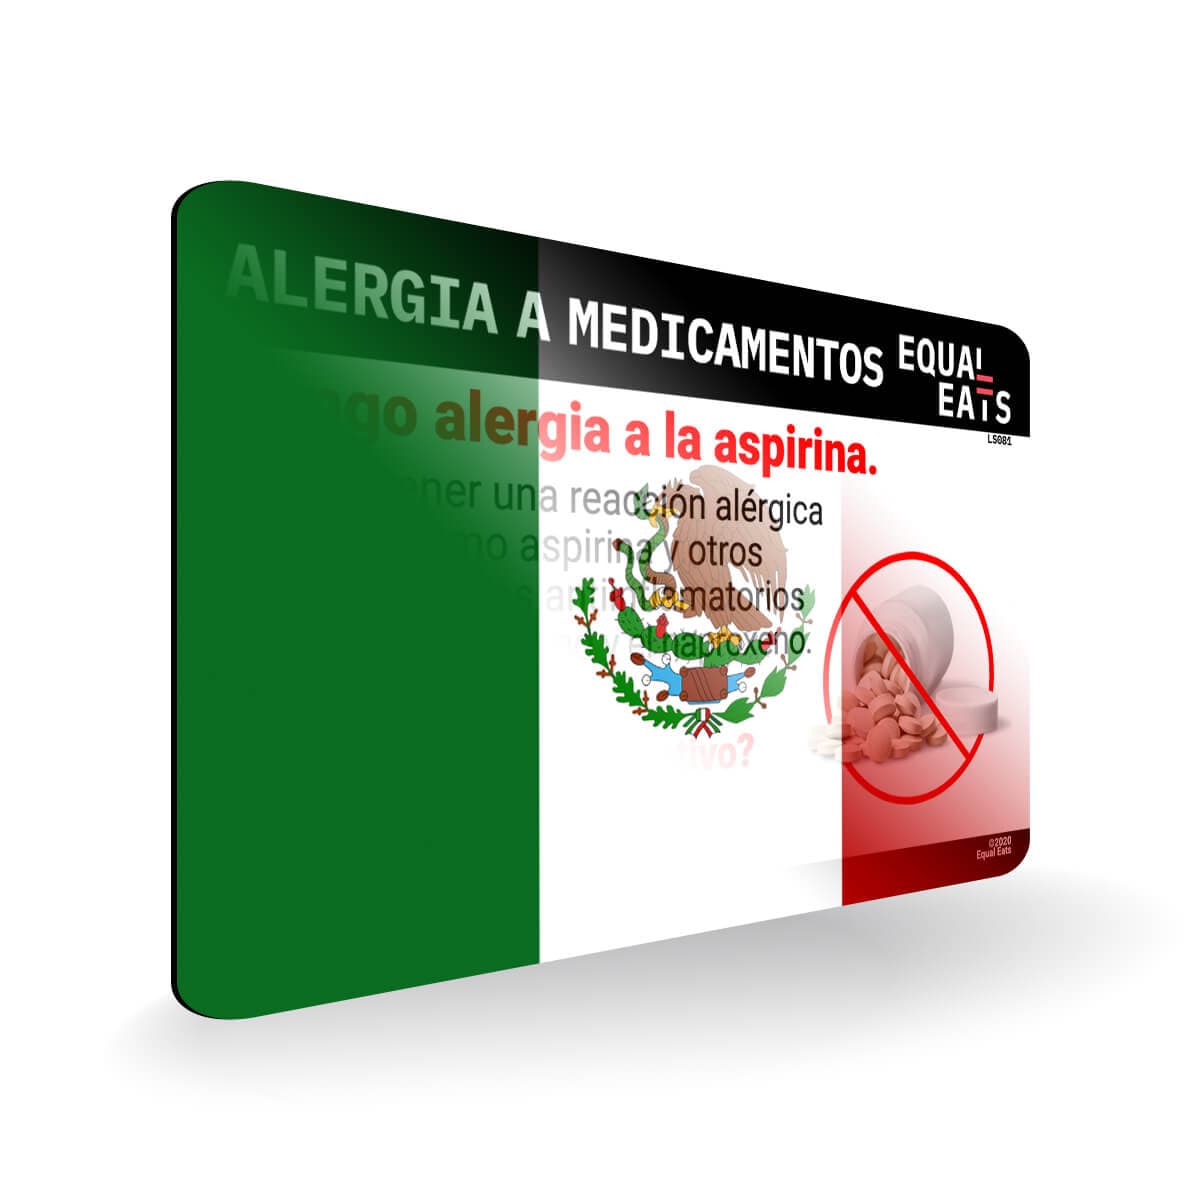 Aspirin Allergy in Spanish. Aspirin medical I.D. Card for Latin America